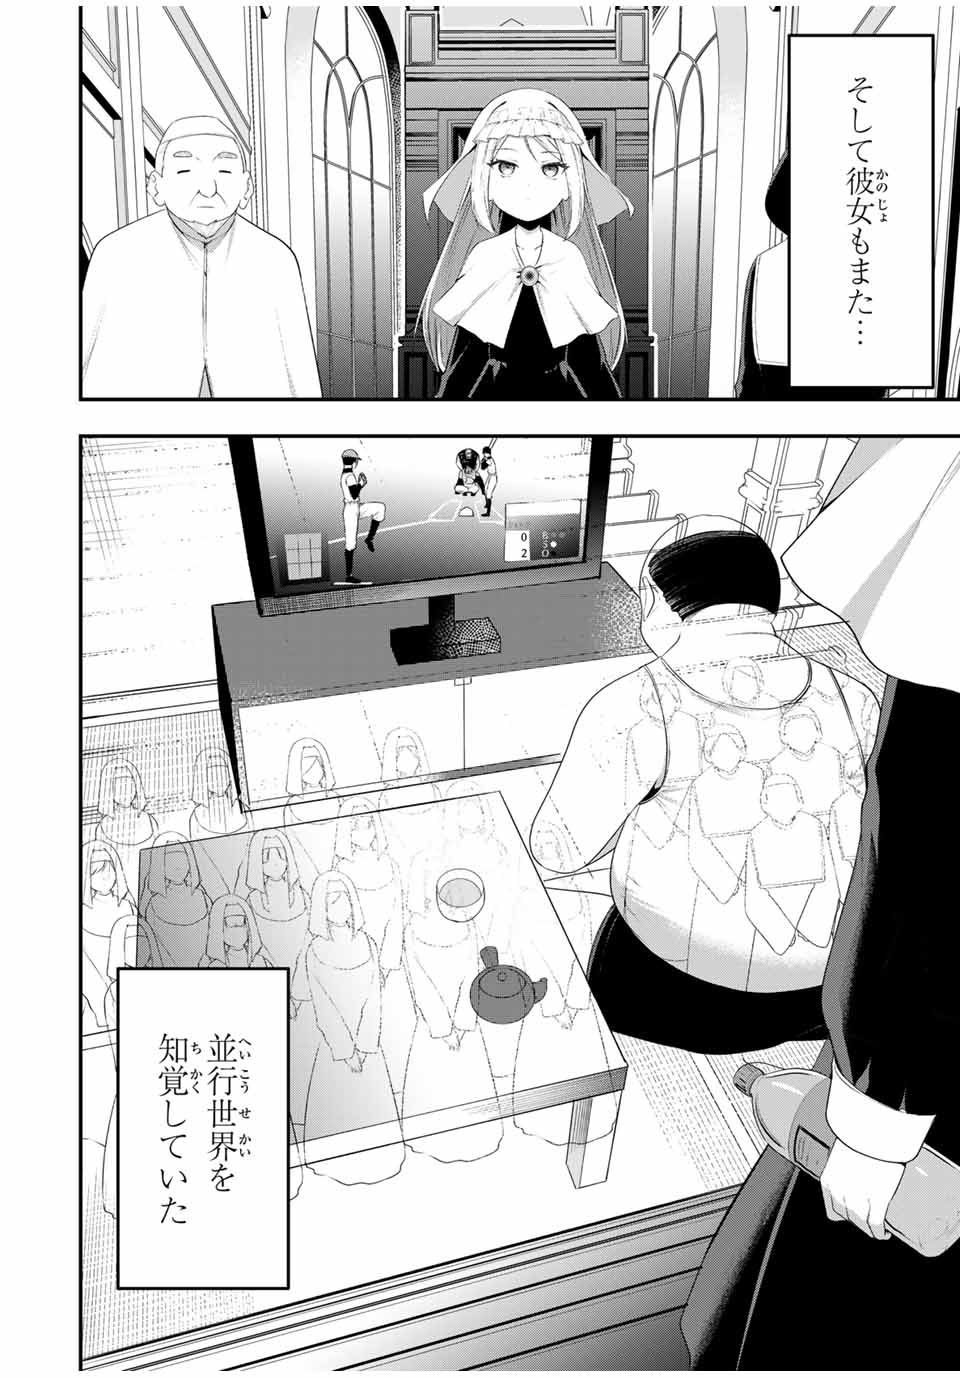 Heroine wa xx Okasegitai - Chapter 15 - Page 5